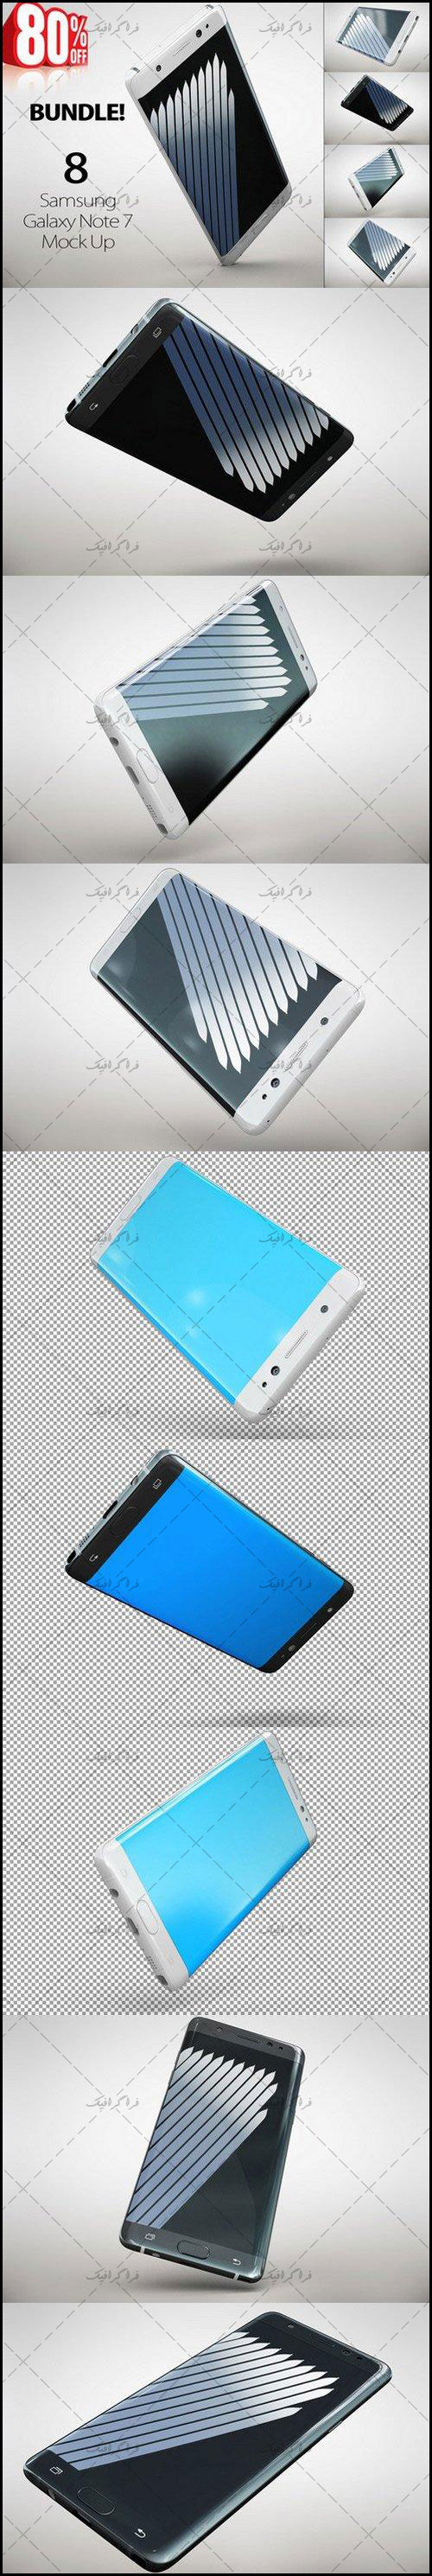 دانلود ماک آپ فتوشاپ موبایل Samsung Galaxy Note 7